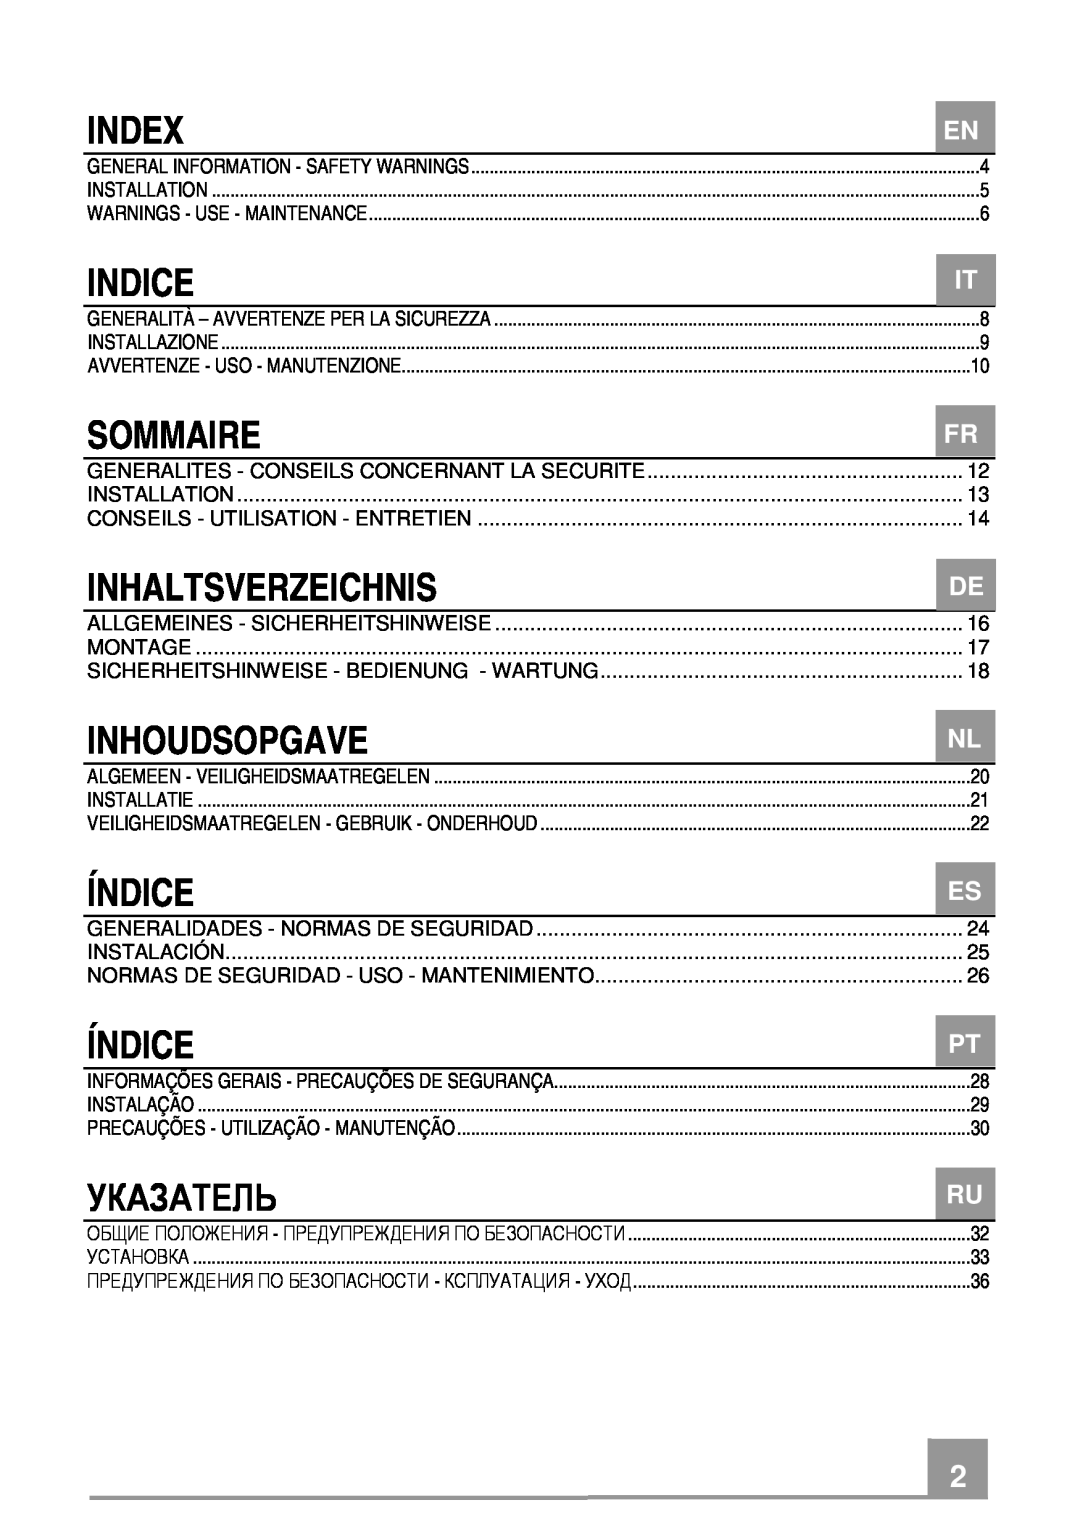 Smeg KSEG51 manual Index, Indice, Sommaire, Inhaltsverzeichnis, Inhoudsopgave, Índice, Указатель 